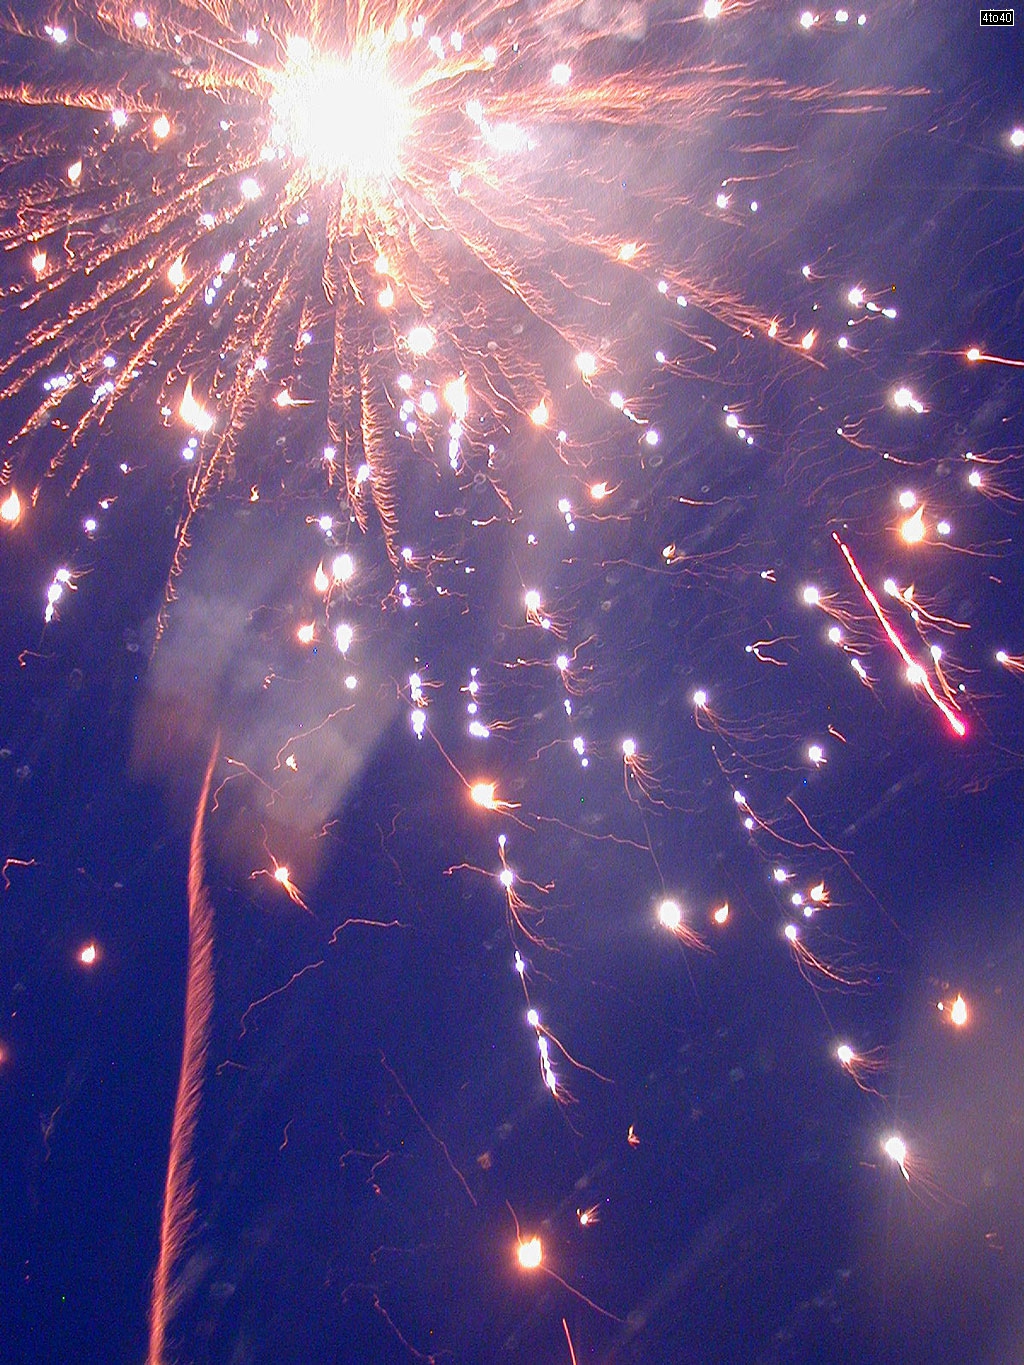 Dussehra festival fireworks at a mela near Swarn Jayanti Park, Rohini, New Delhi